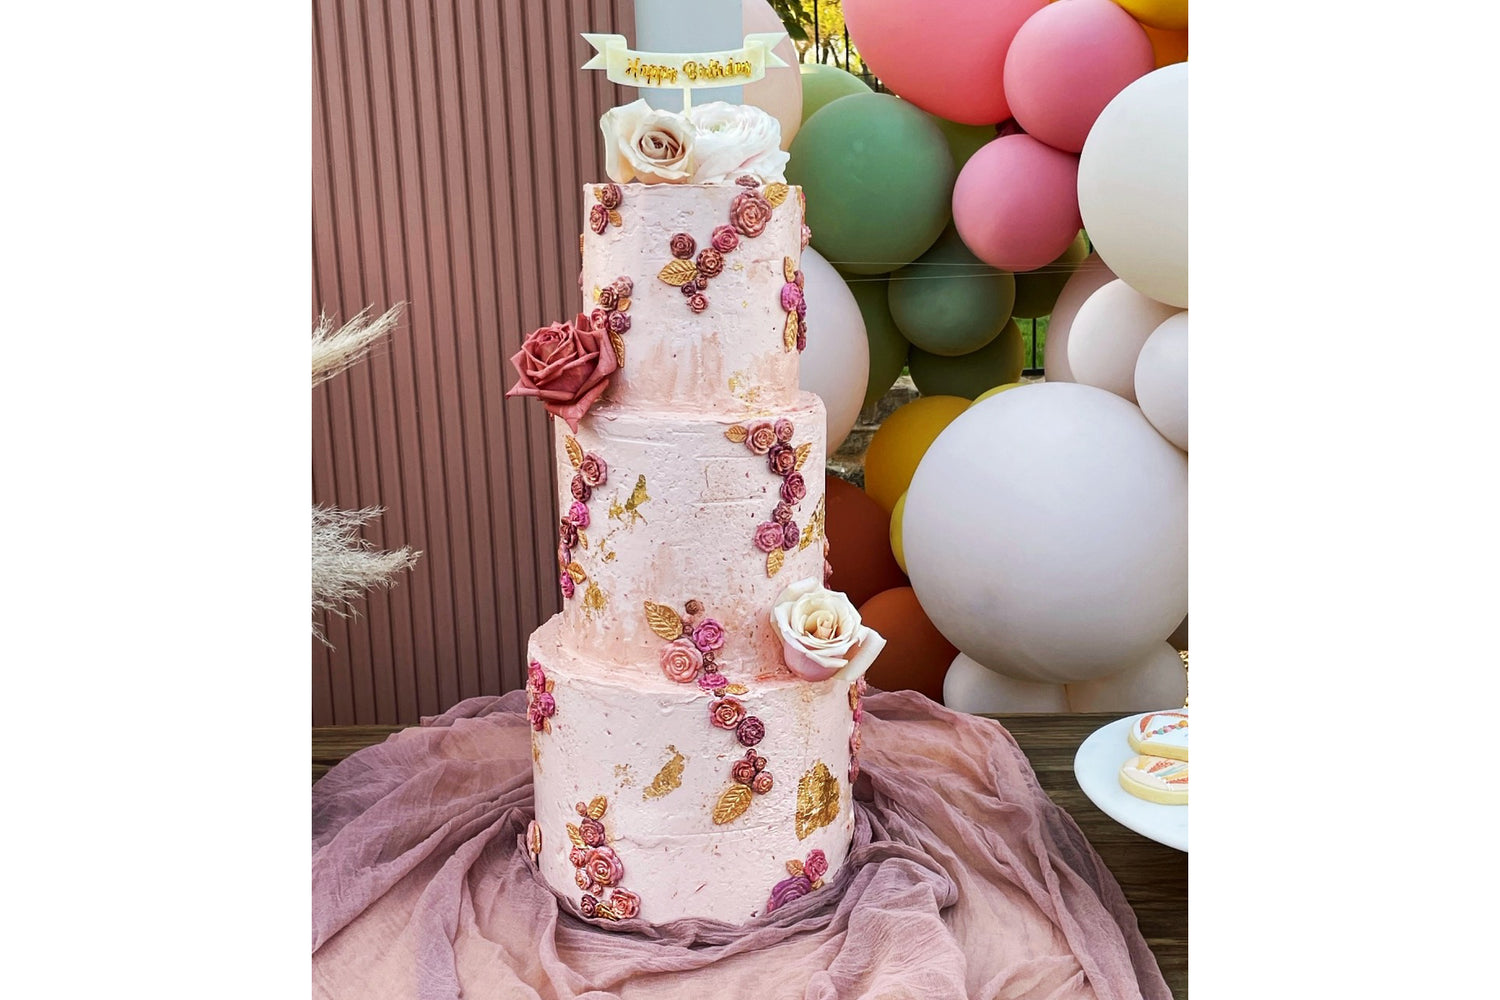 Boho Floral themed cake